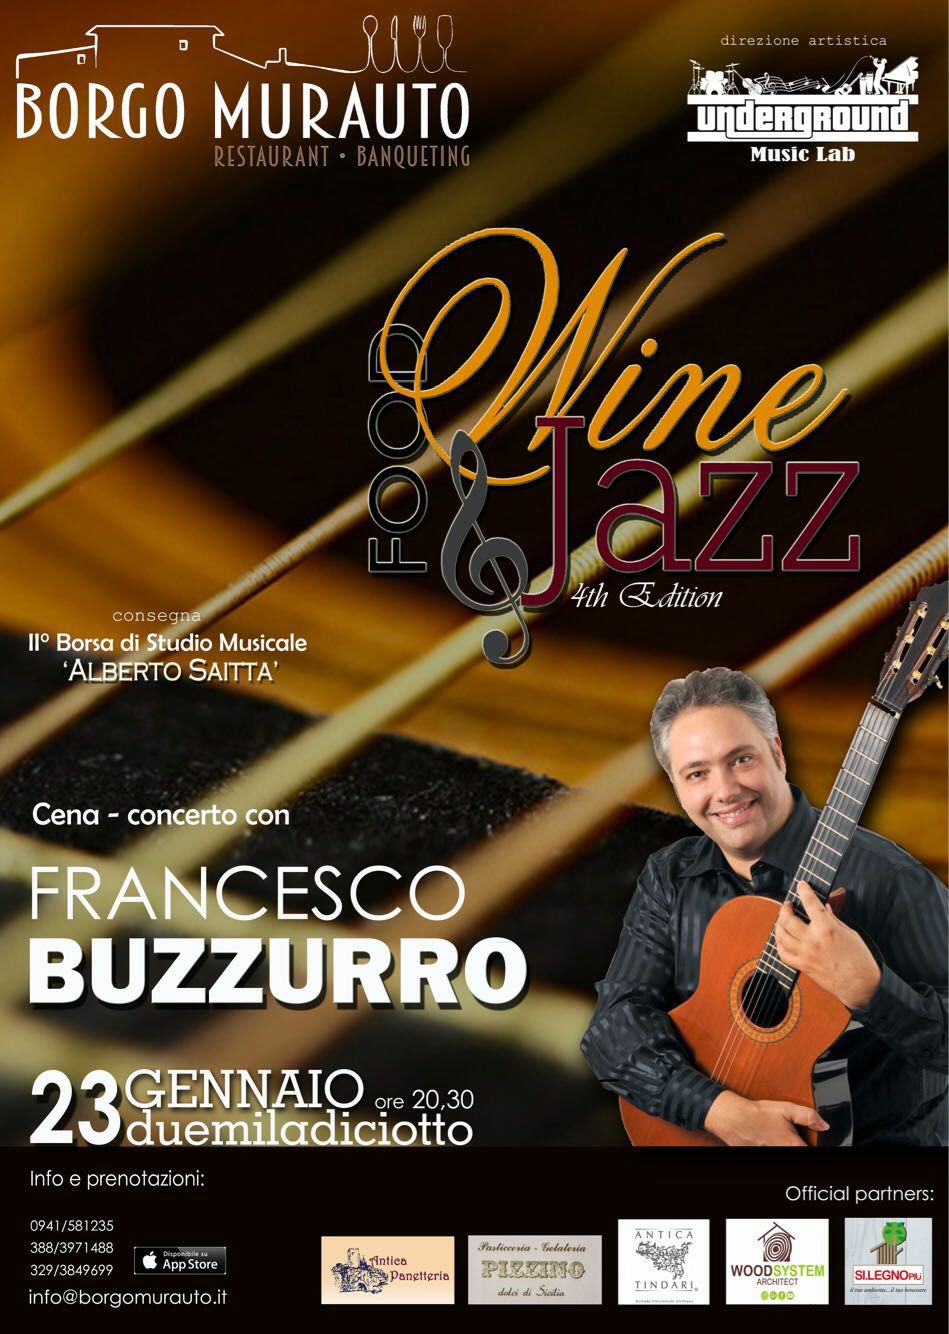 Food Wine Jazz - Borgo Murauto - Bando Alberto Saitta